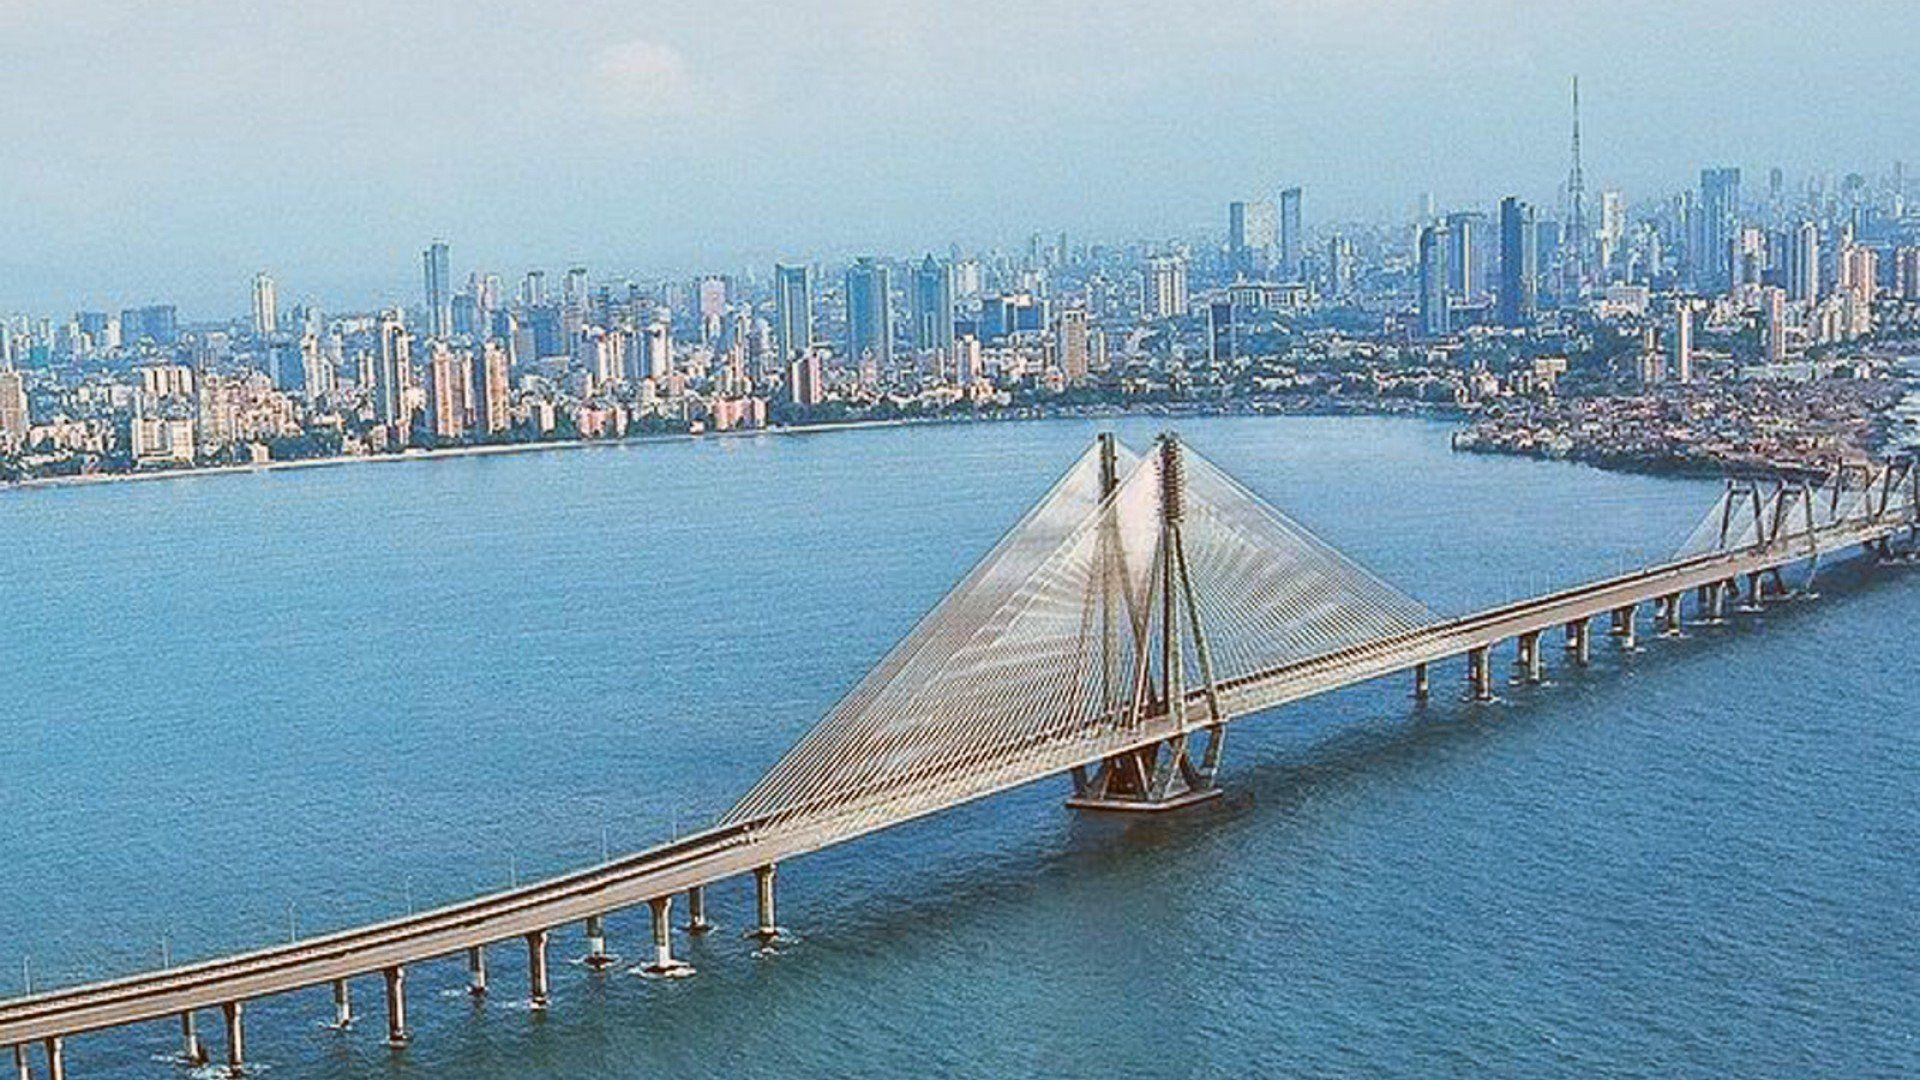 Mumbai Wallpaper: HD Wallpaper Available For Free Download. Bandra worli sea link, Mumbai city, Economy of india